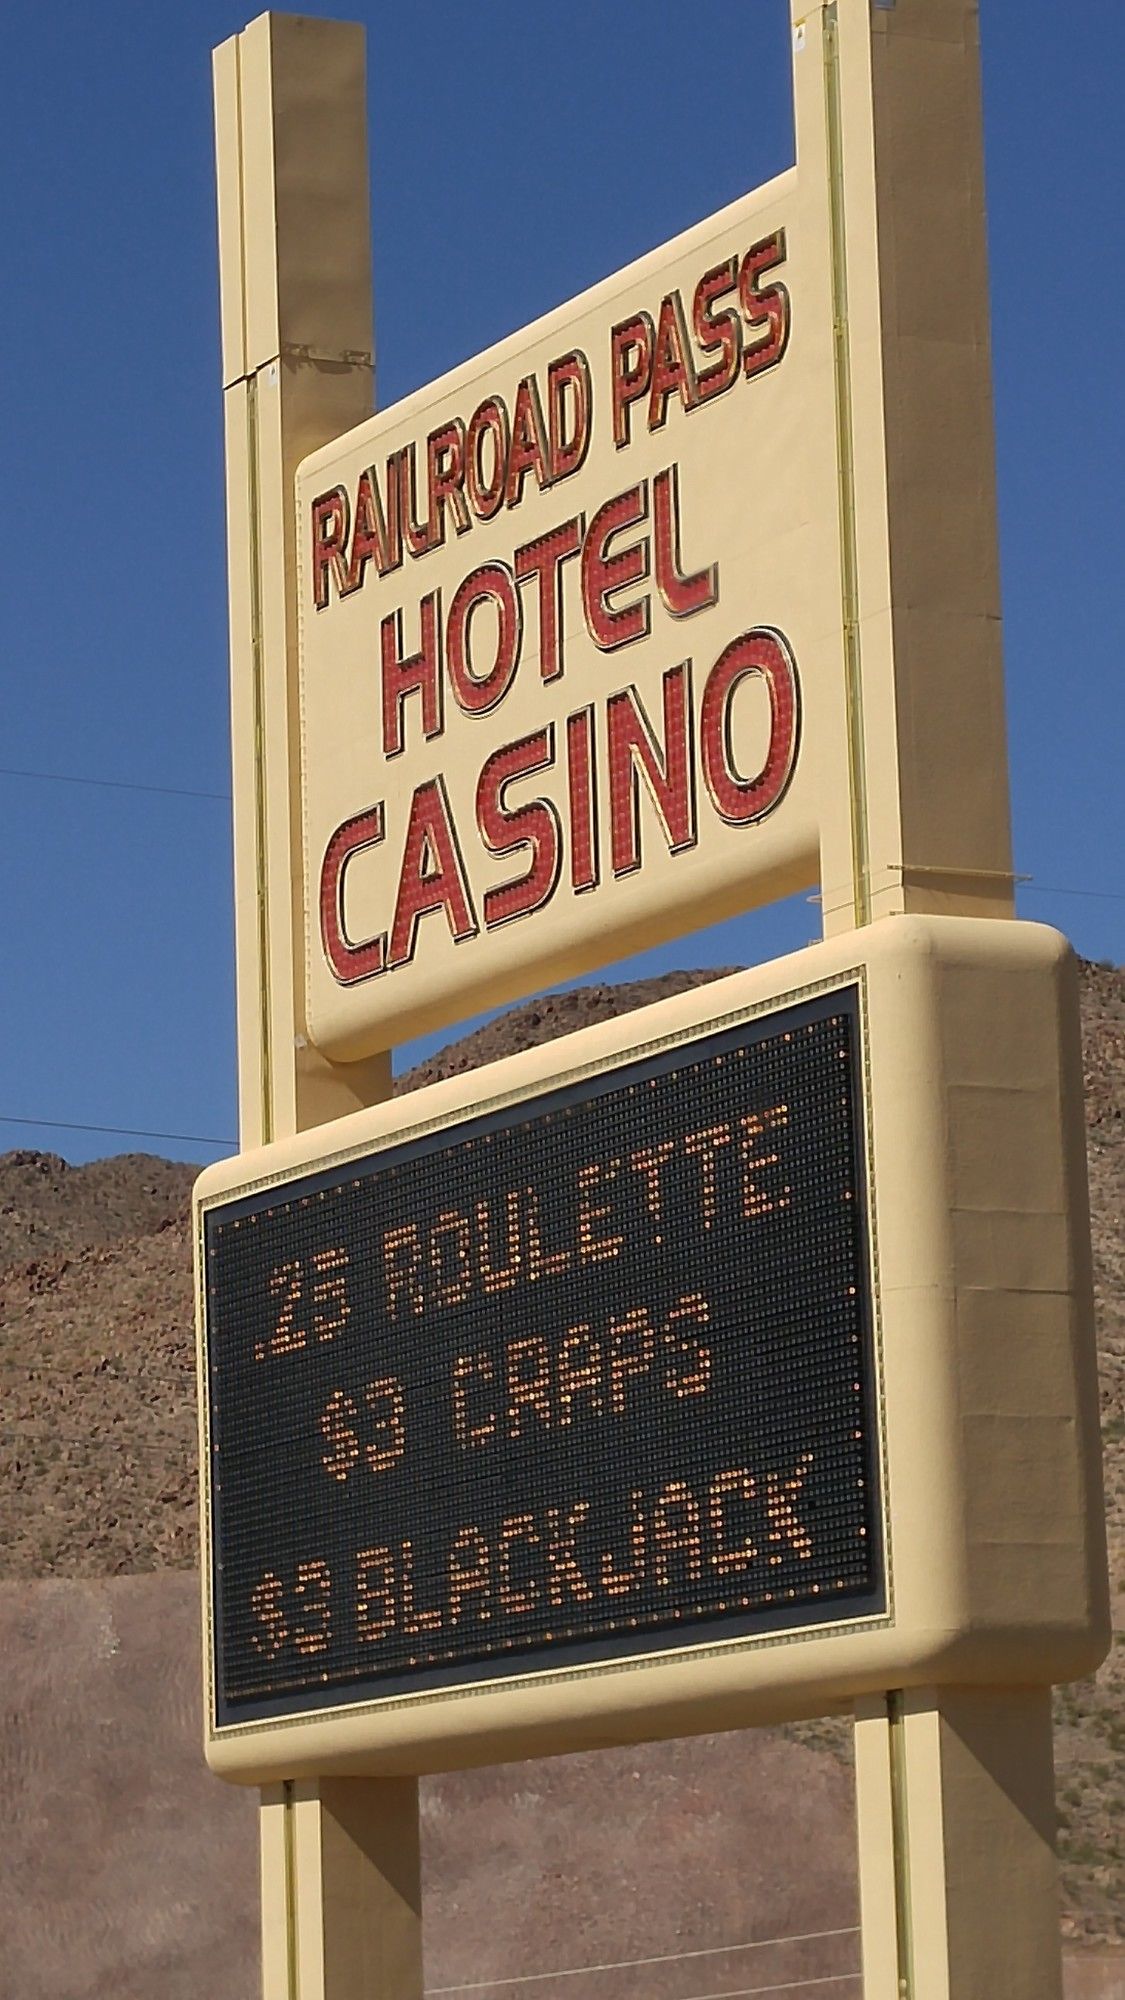 Railroad Pass Hotel and Casino Ramada by Wyndham